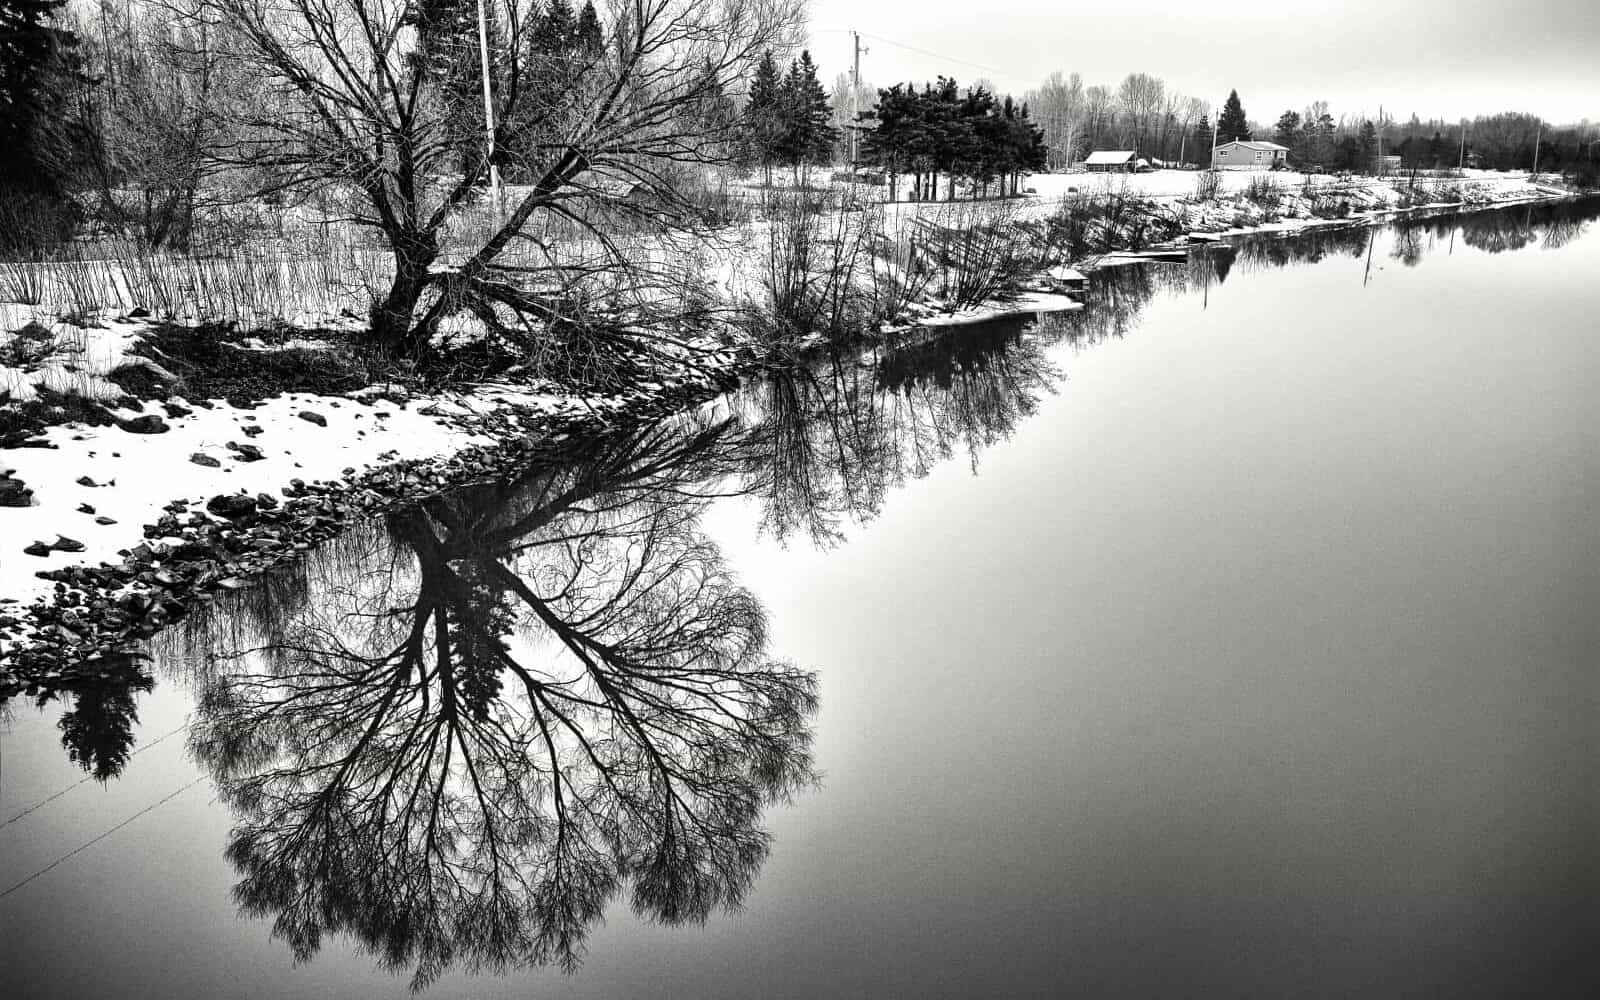 Stan Williams Image River in the winter